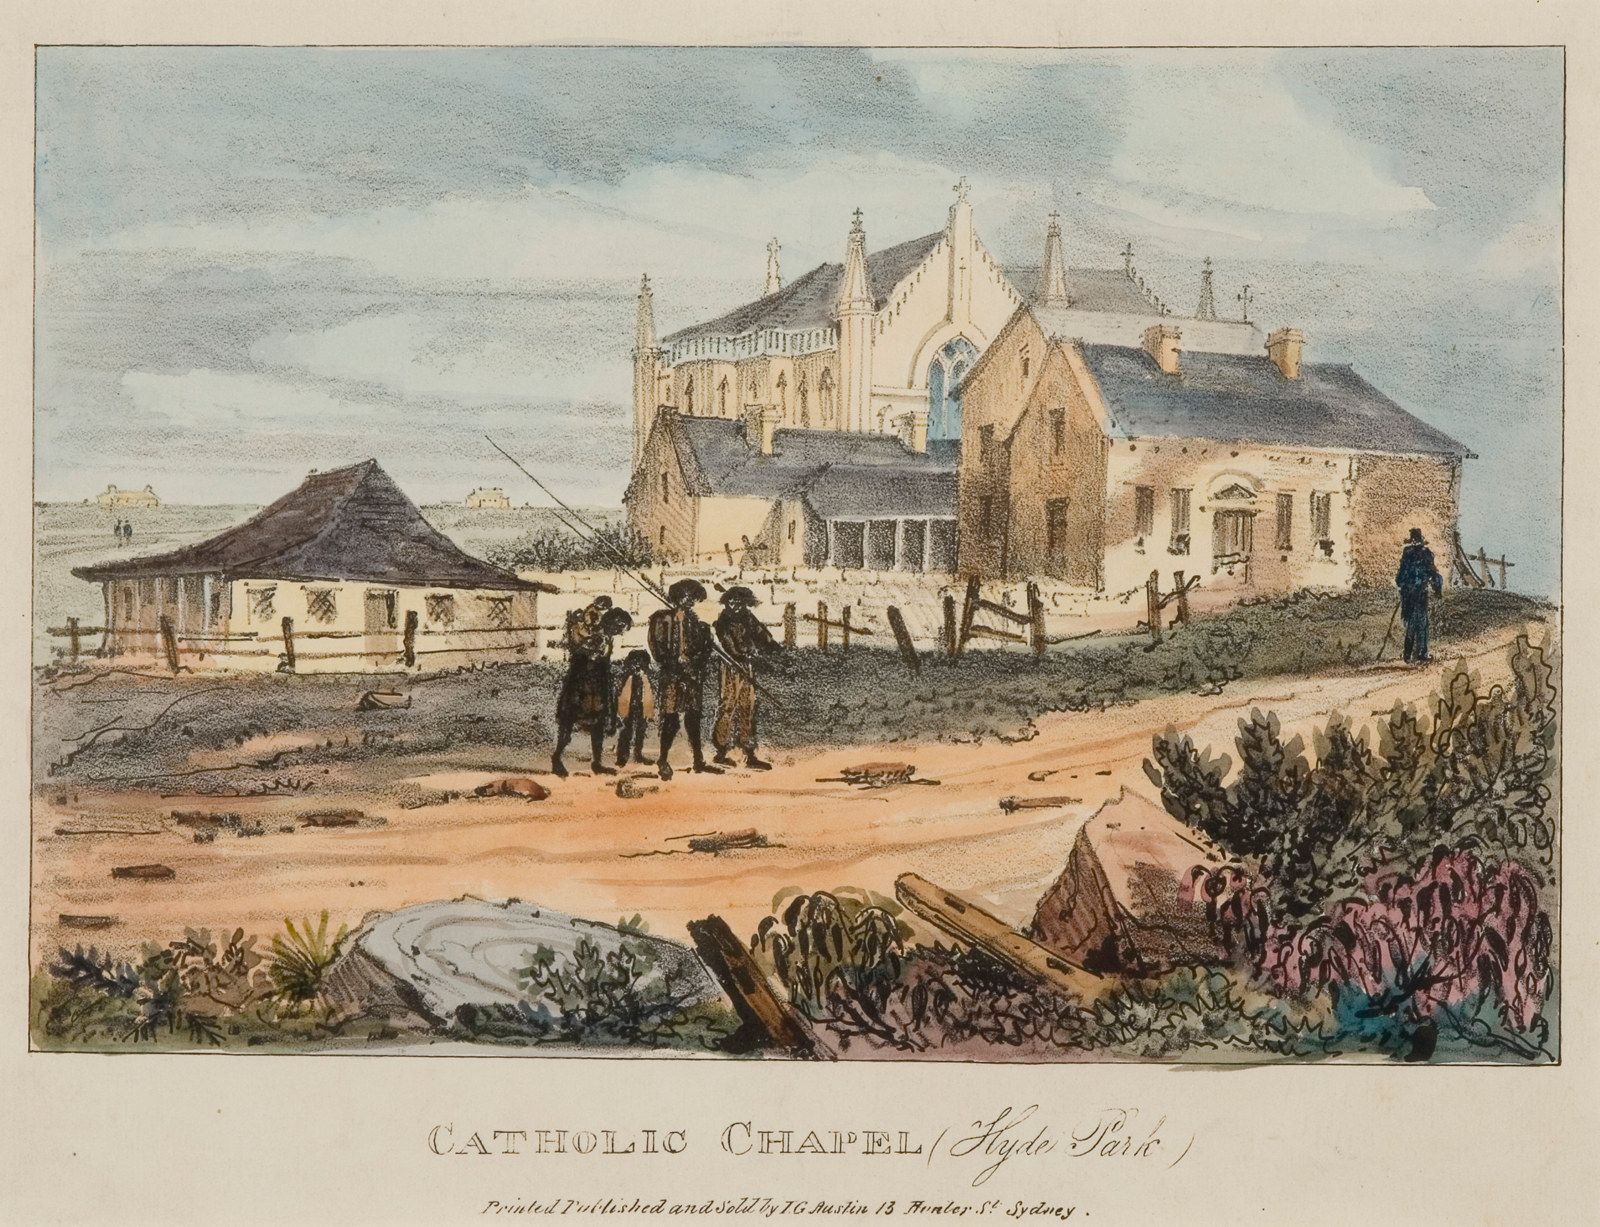 Catholic chapel (Hyde Park) (November, 1836)